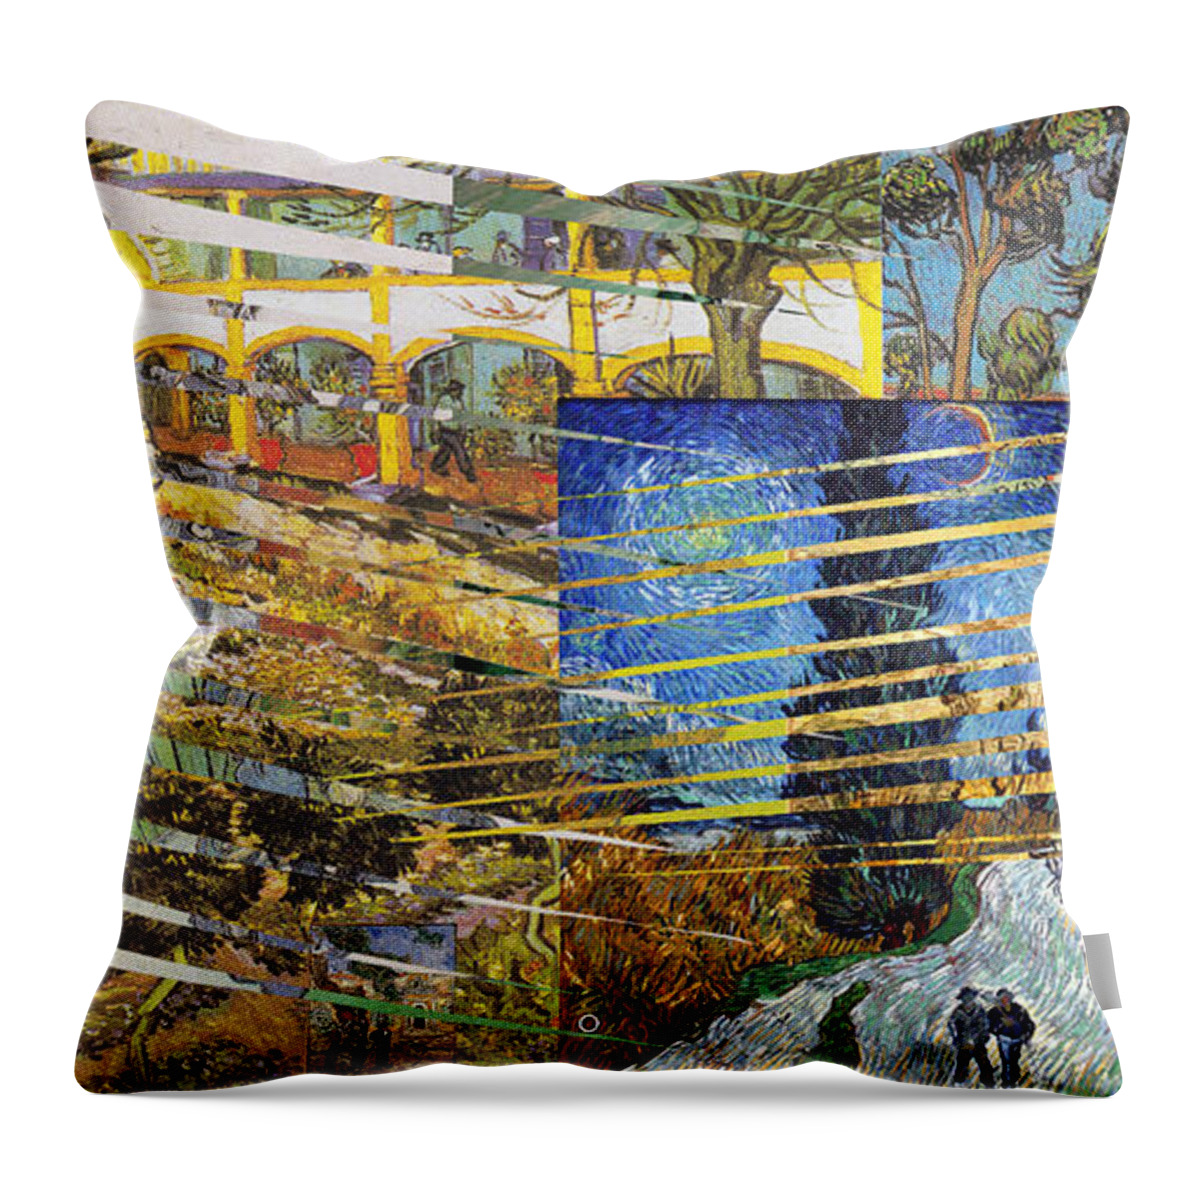 Vincent Van Gogh Throw Pillow featuring the digital art Van Gogh Mural Il by David Bridburg